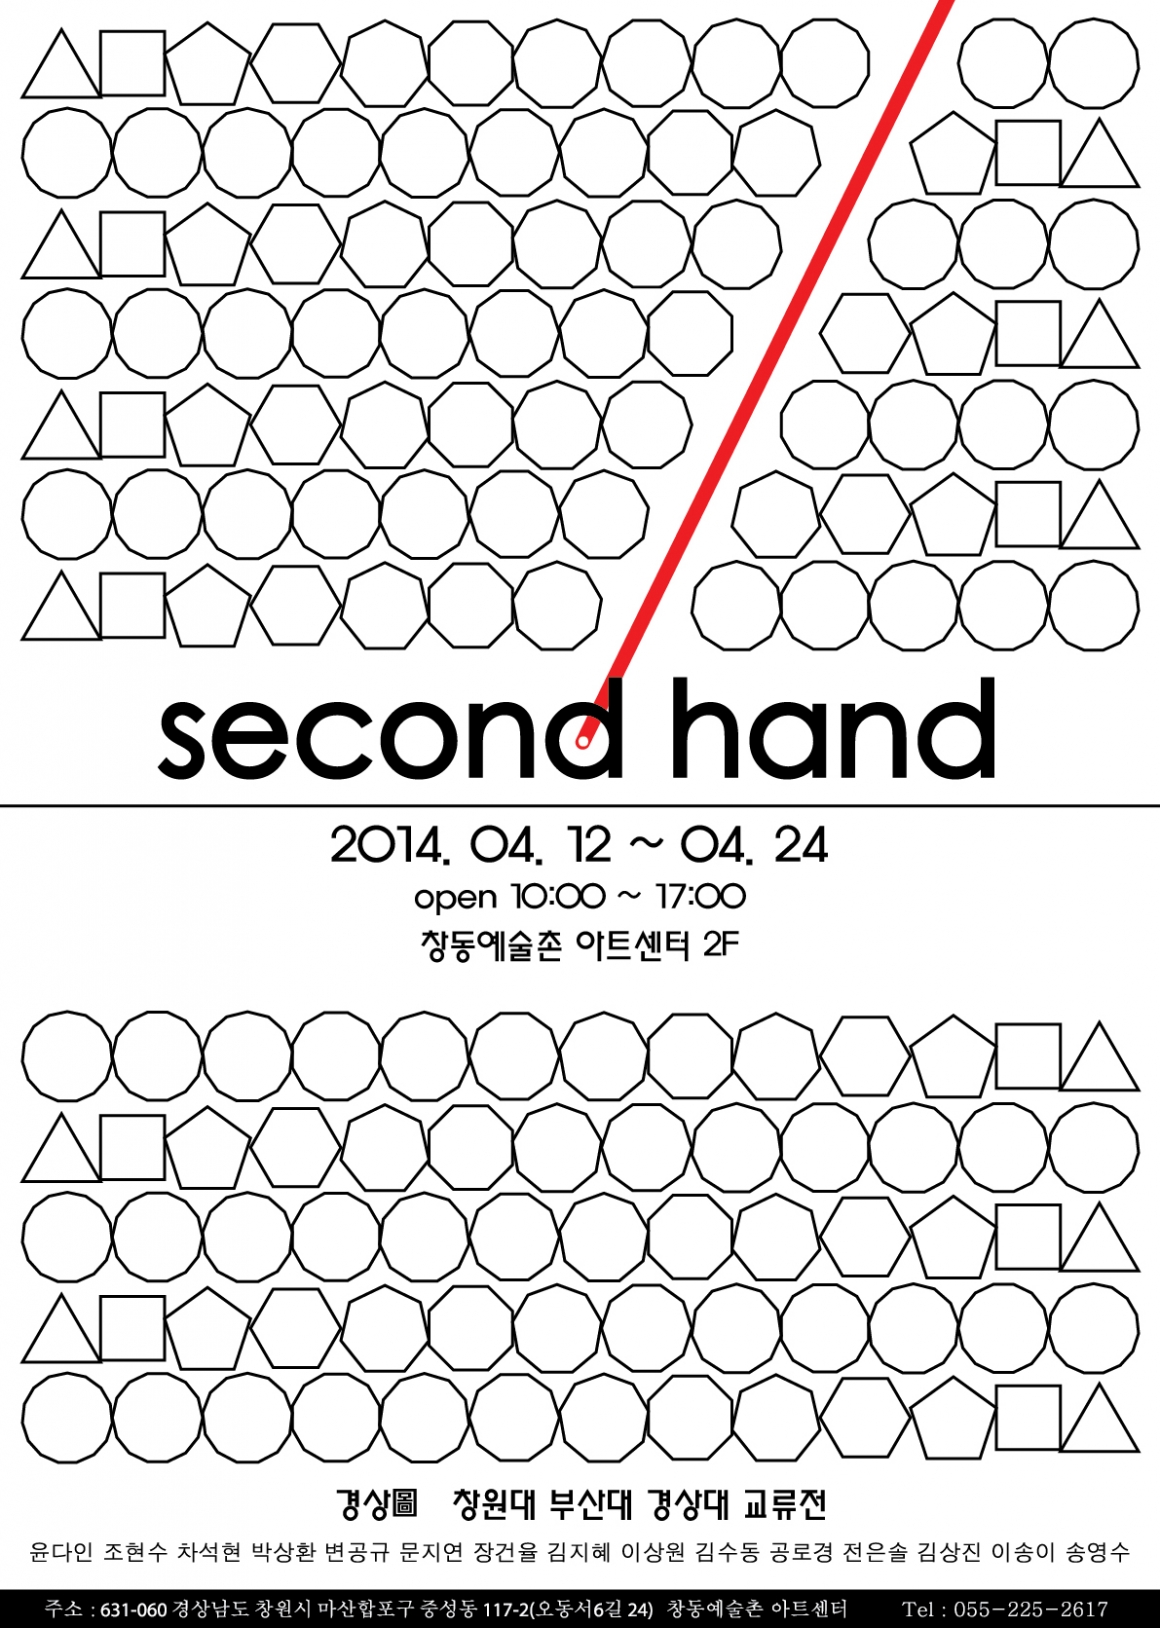 ＇Second hand＇ 전시 실시간 포착 01 (아트센터 2F)#2